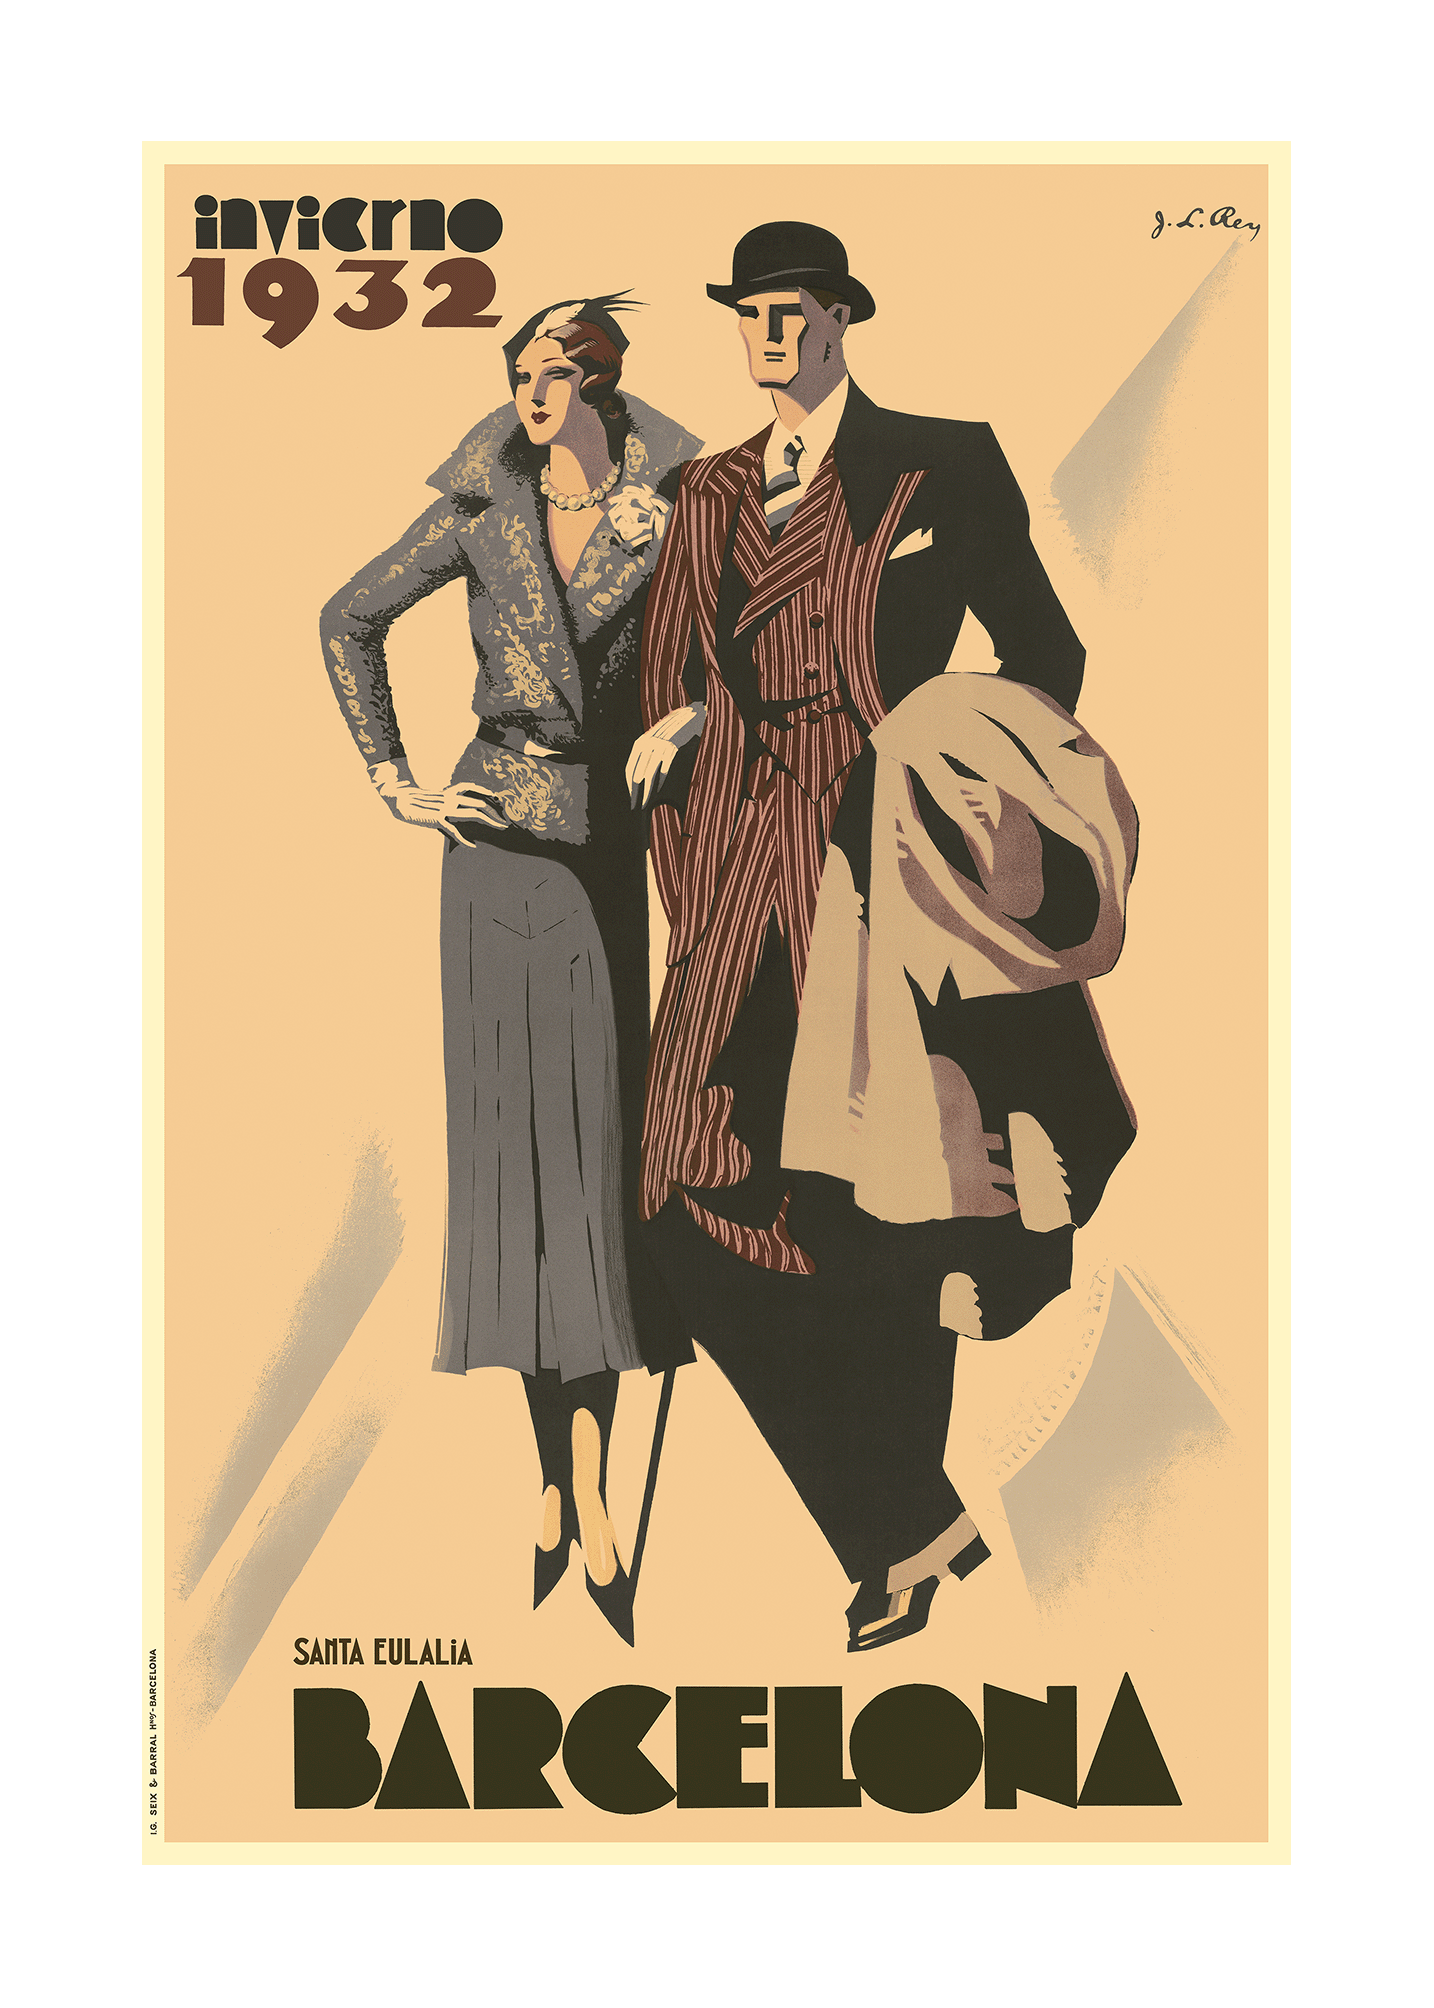 Impeccable Lovers , Santa Eulalia, Barcelona 1932.